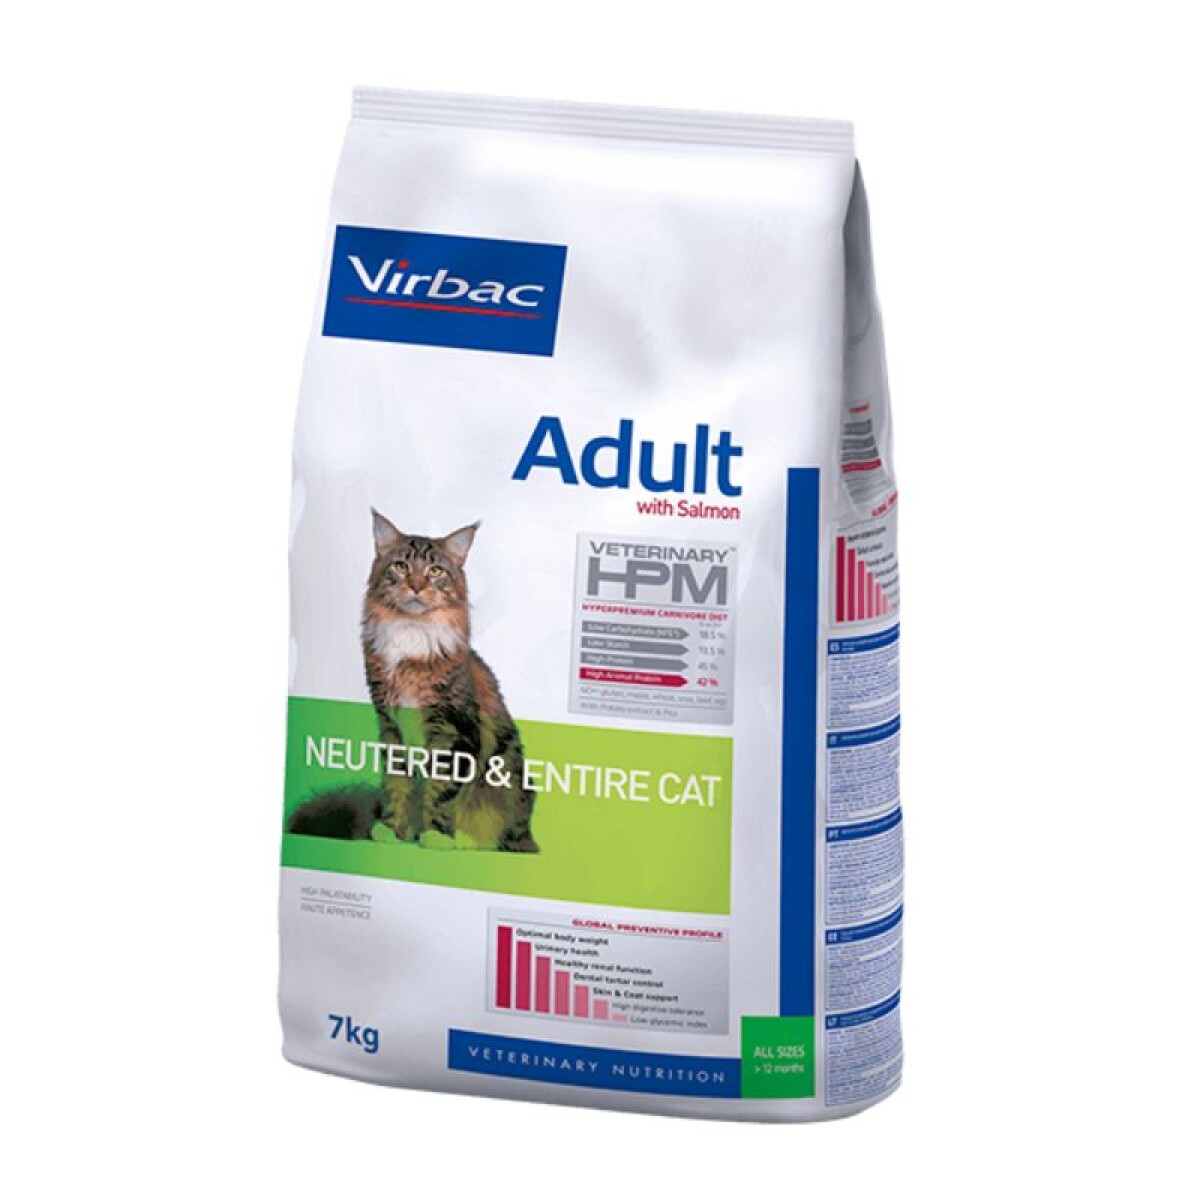 HPM ADULT CAT 7KG - Hpm Adult Cat 7kg 